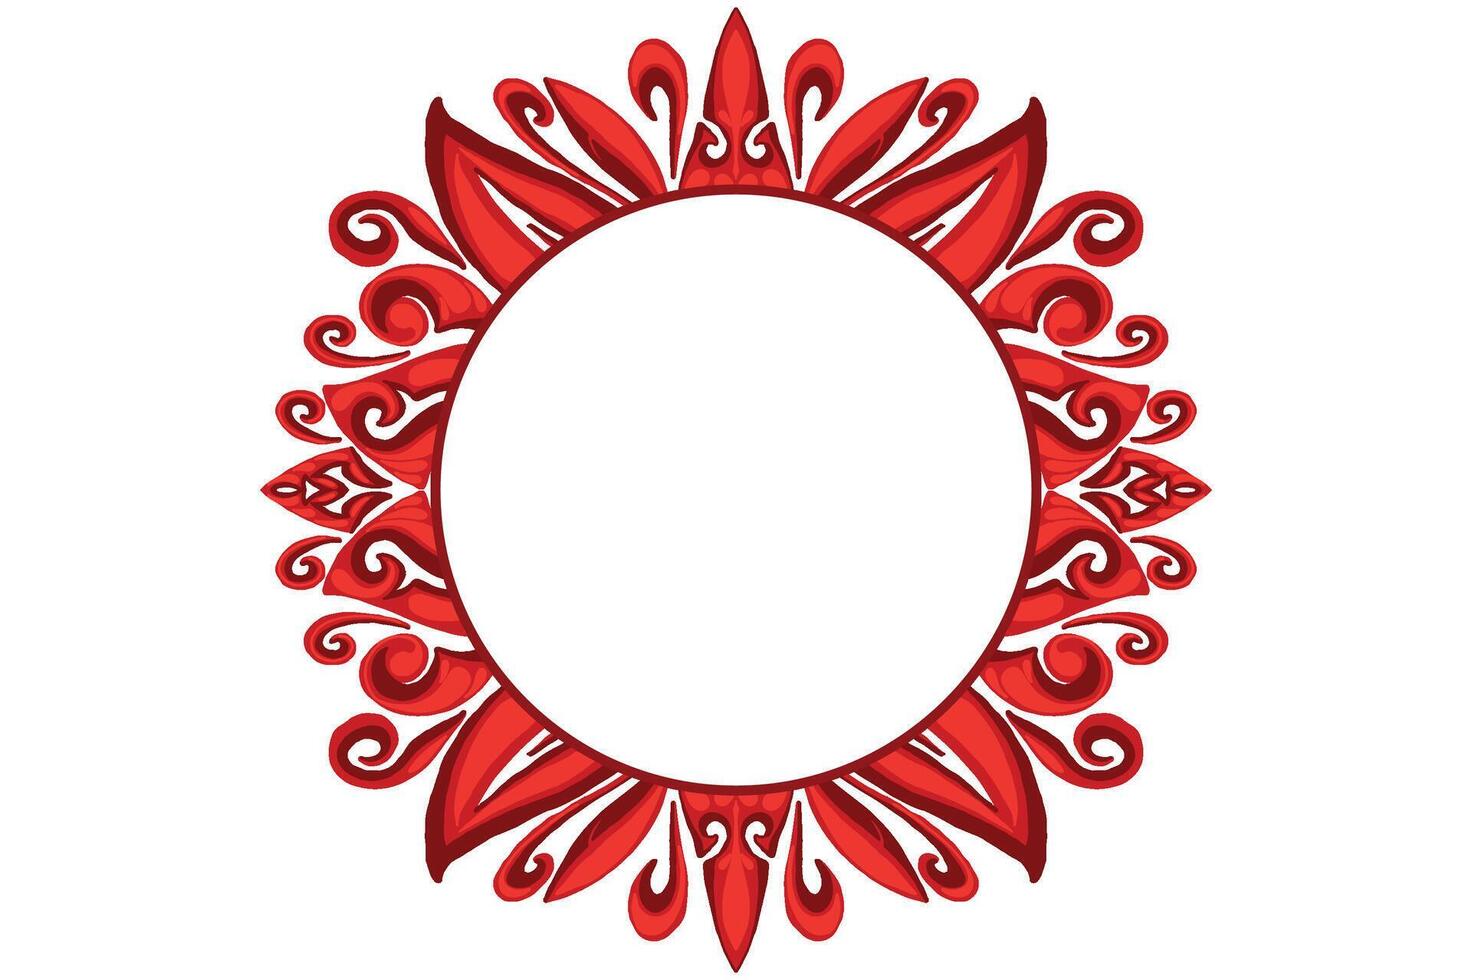 rot Orament Rahmen Rand Vektor zum Dekoration Design